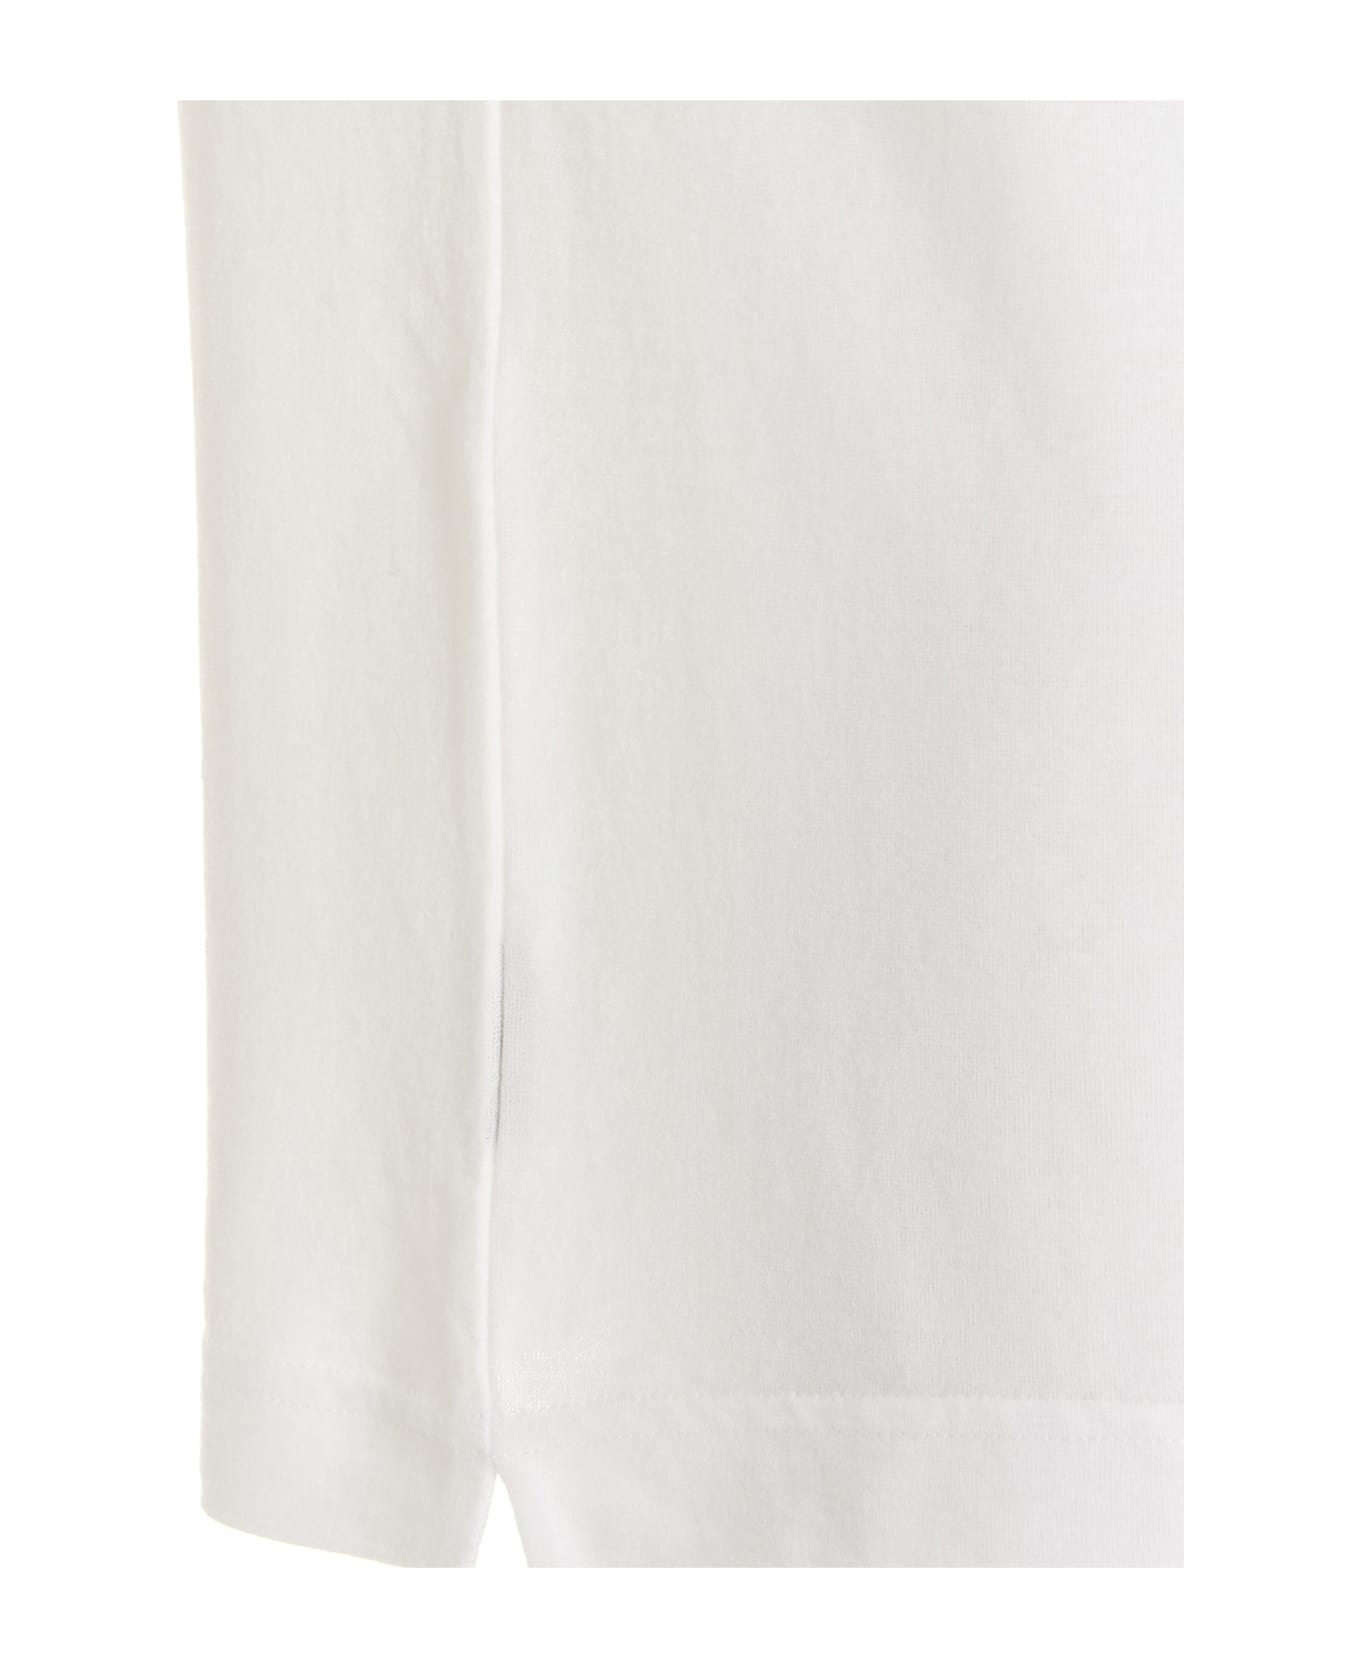 Zanone Ice Cotton T-shirt - Bianco